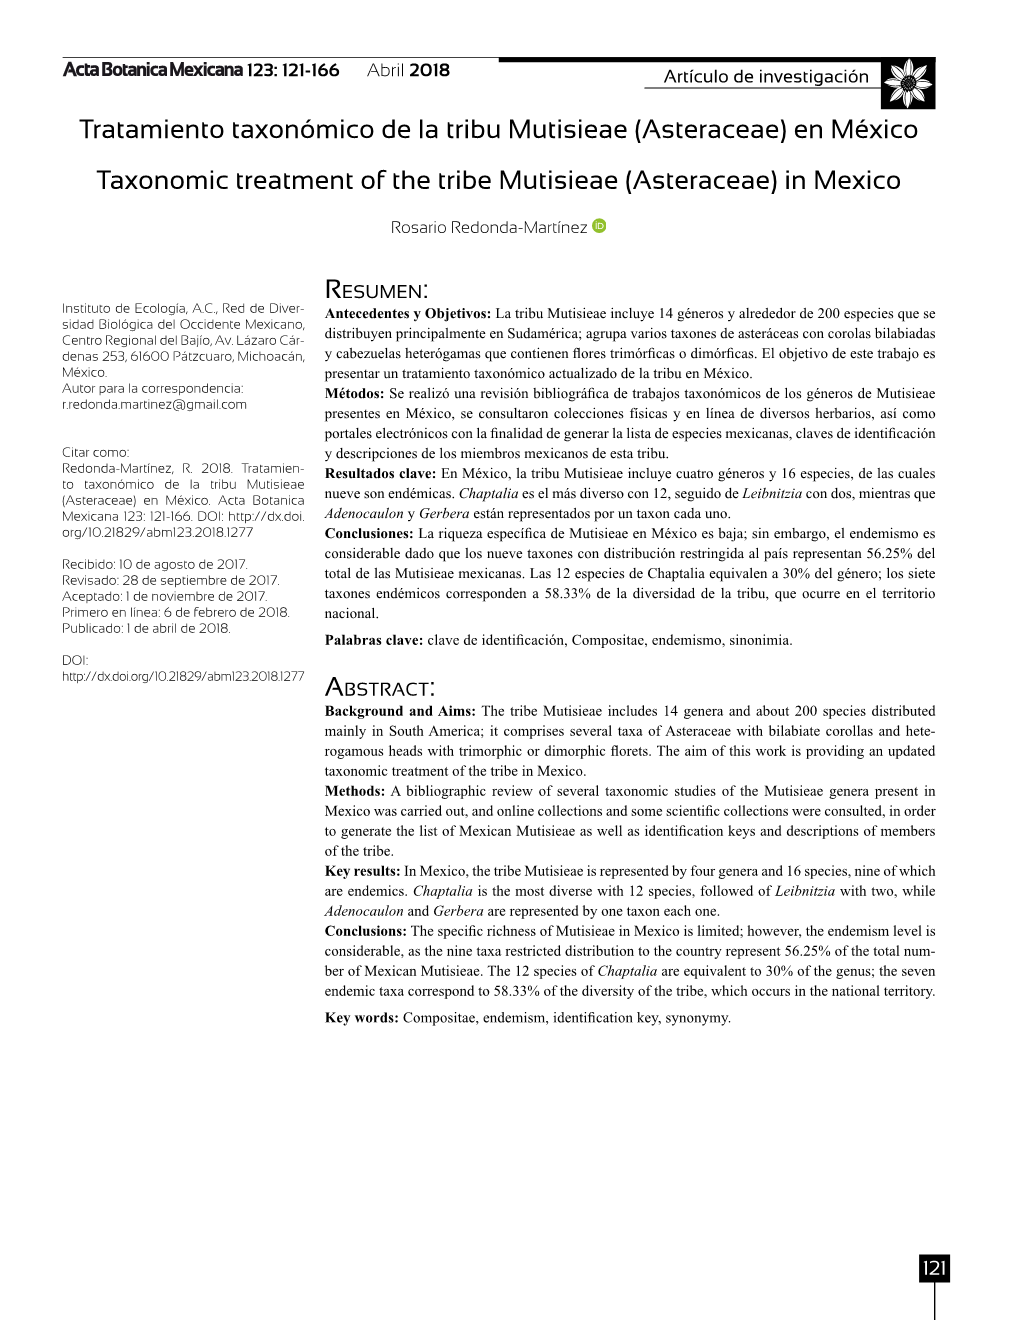 Tratamiento Taxonómico De La Tribu Mutisieae (Asteraceae) En México Taxonomic Treatment of the Tribe Mutisieae (Asteraceae) in Mexico